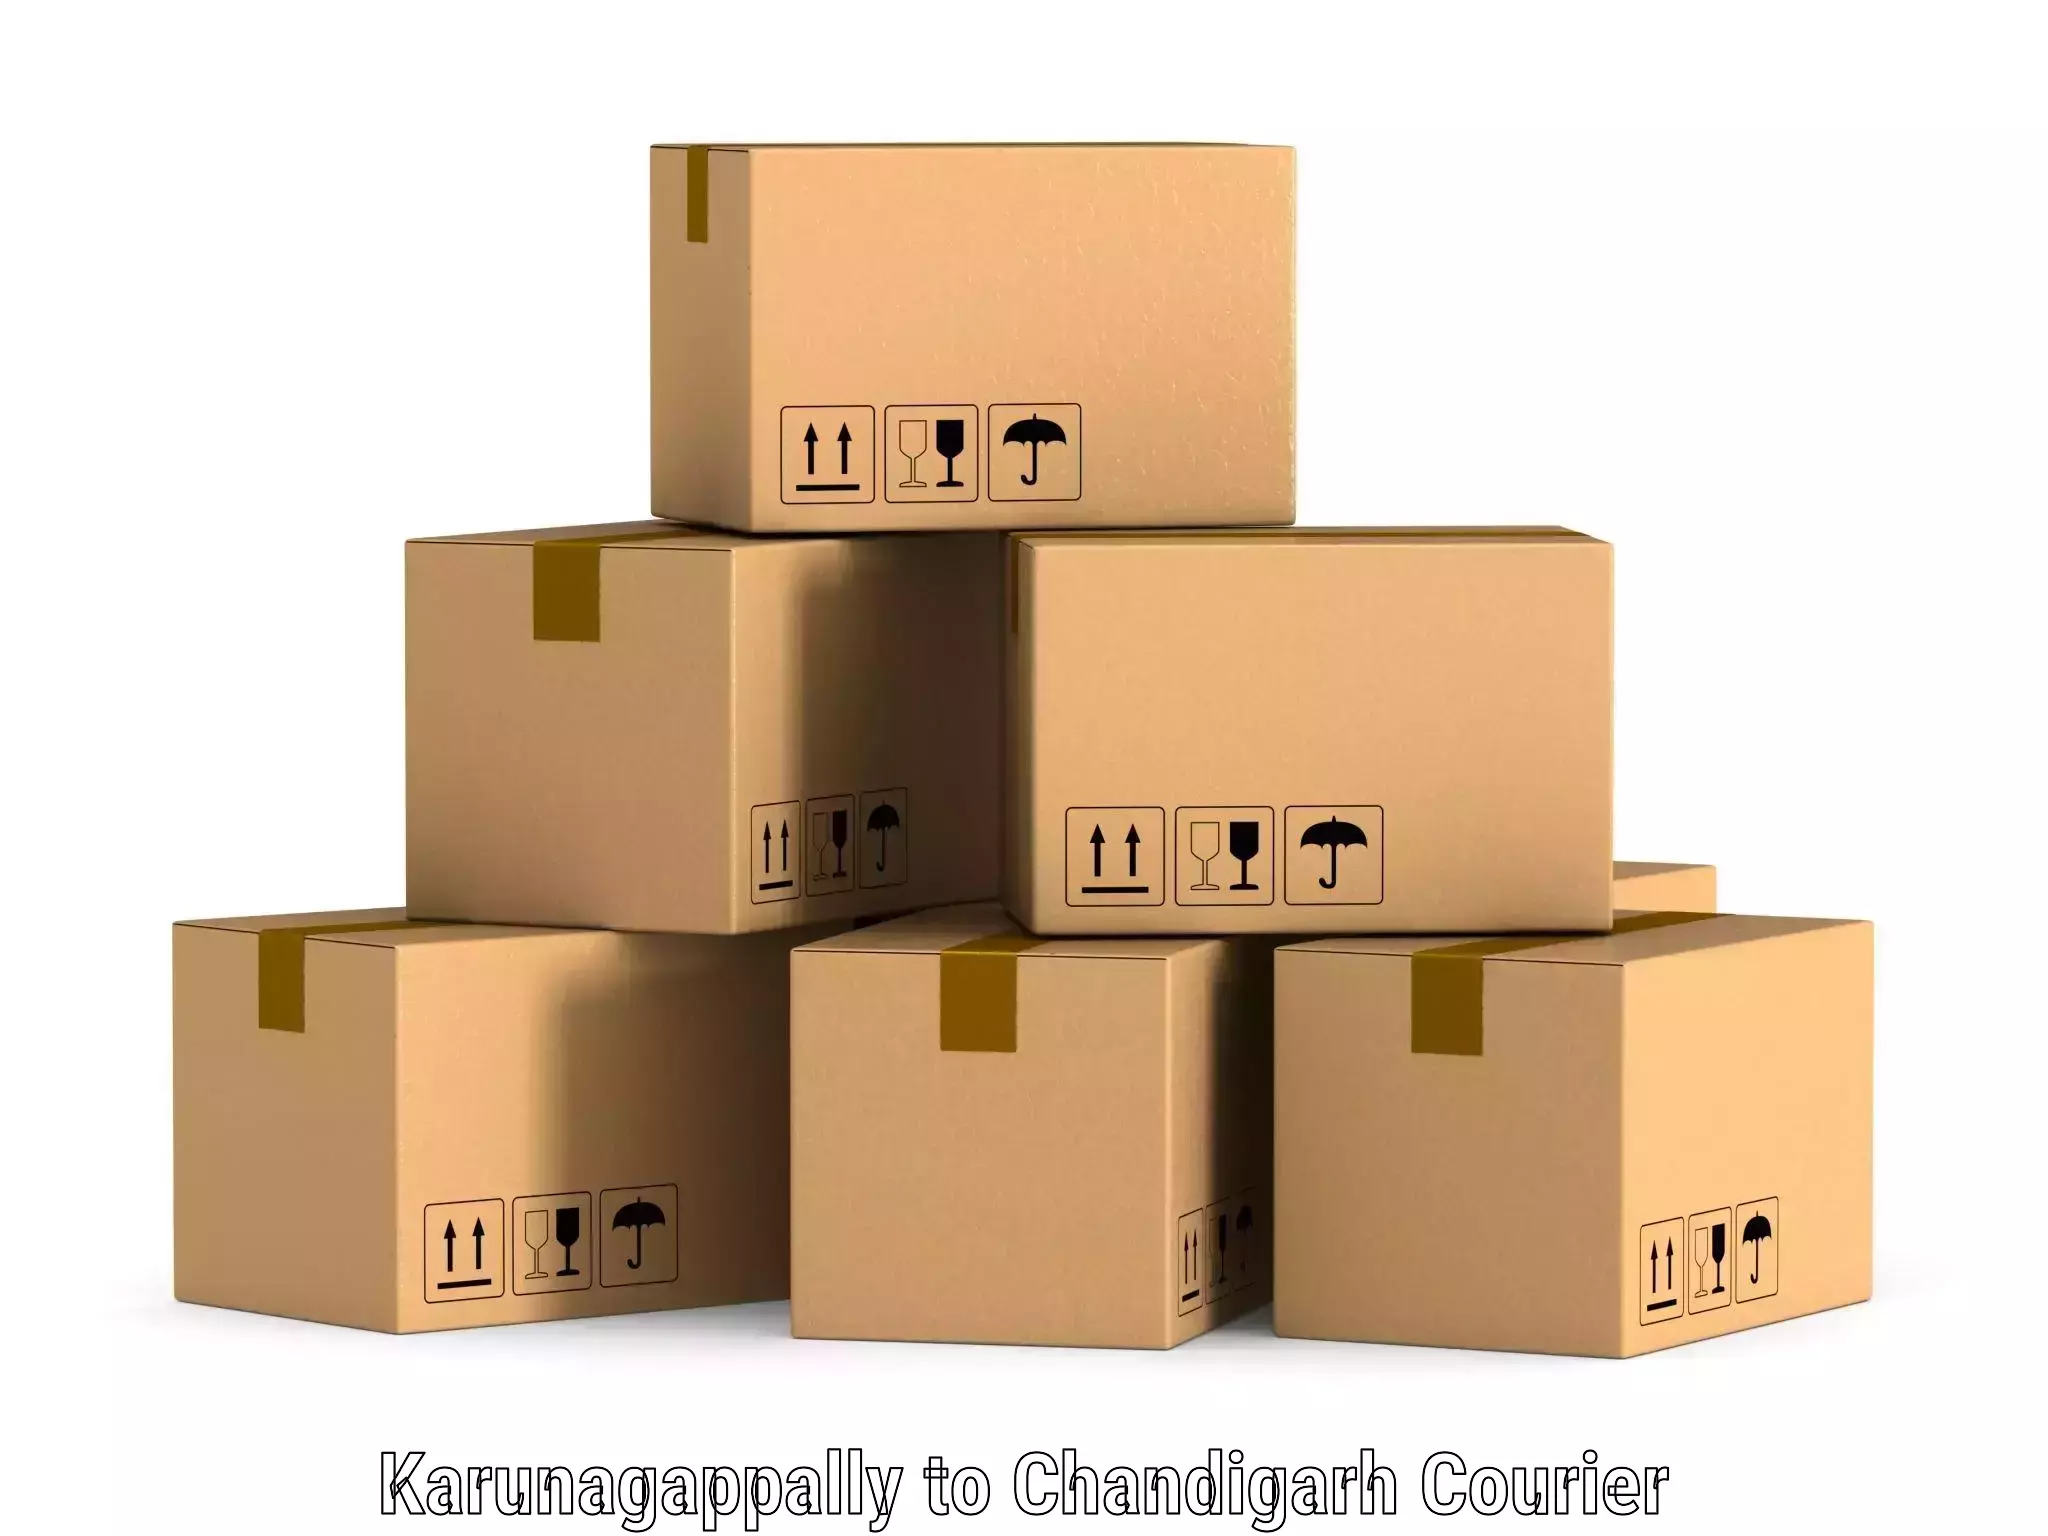 Global logistics network Karunagappally to Chandigarh